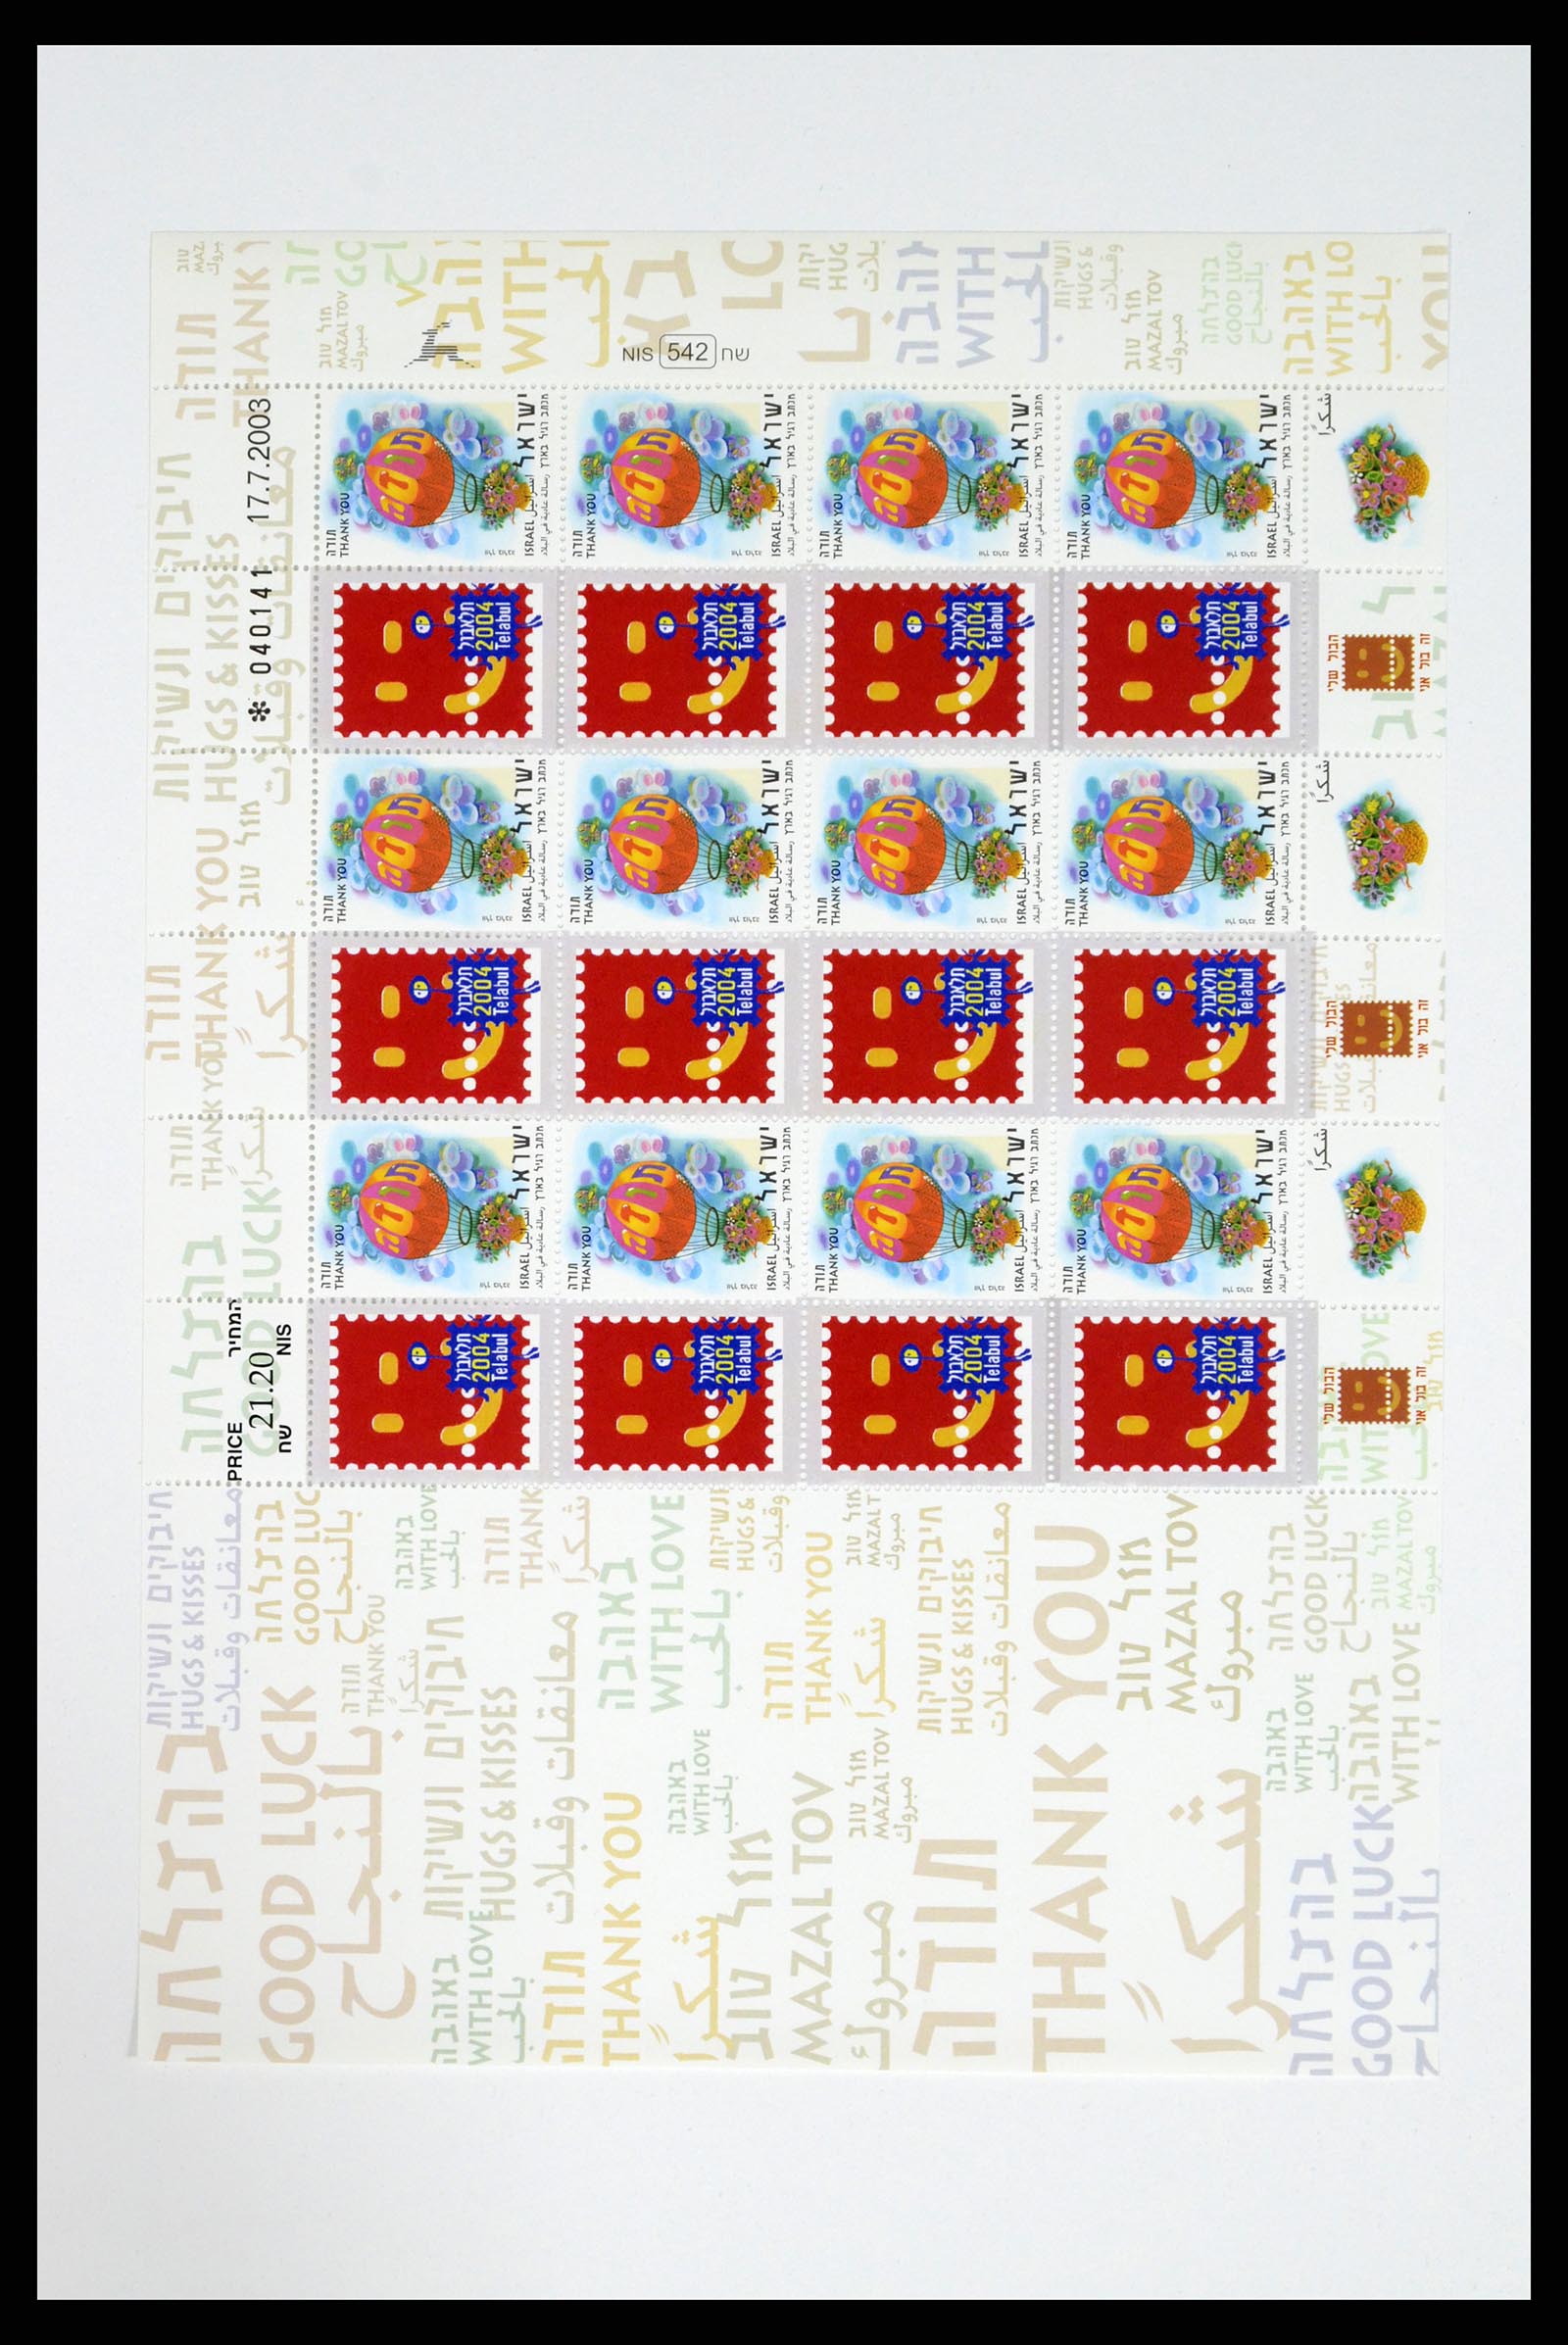 37779 327 - Stamp collection 37779 Israel sheetlets 1986-2009.